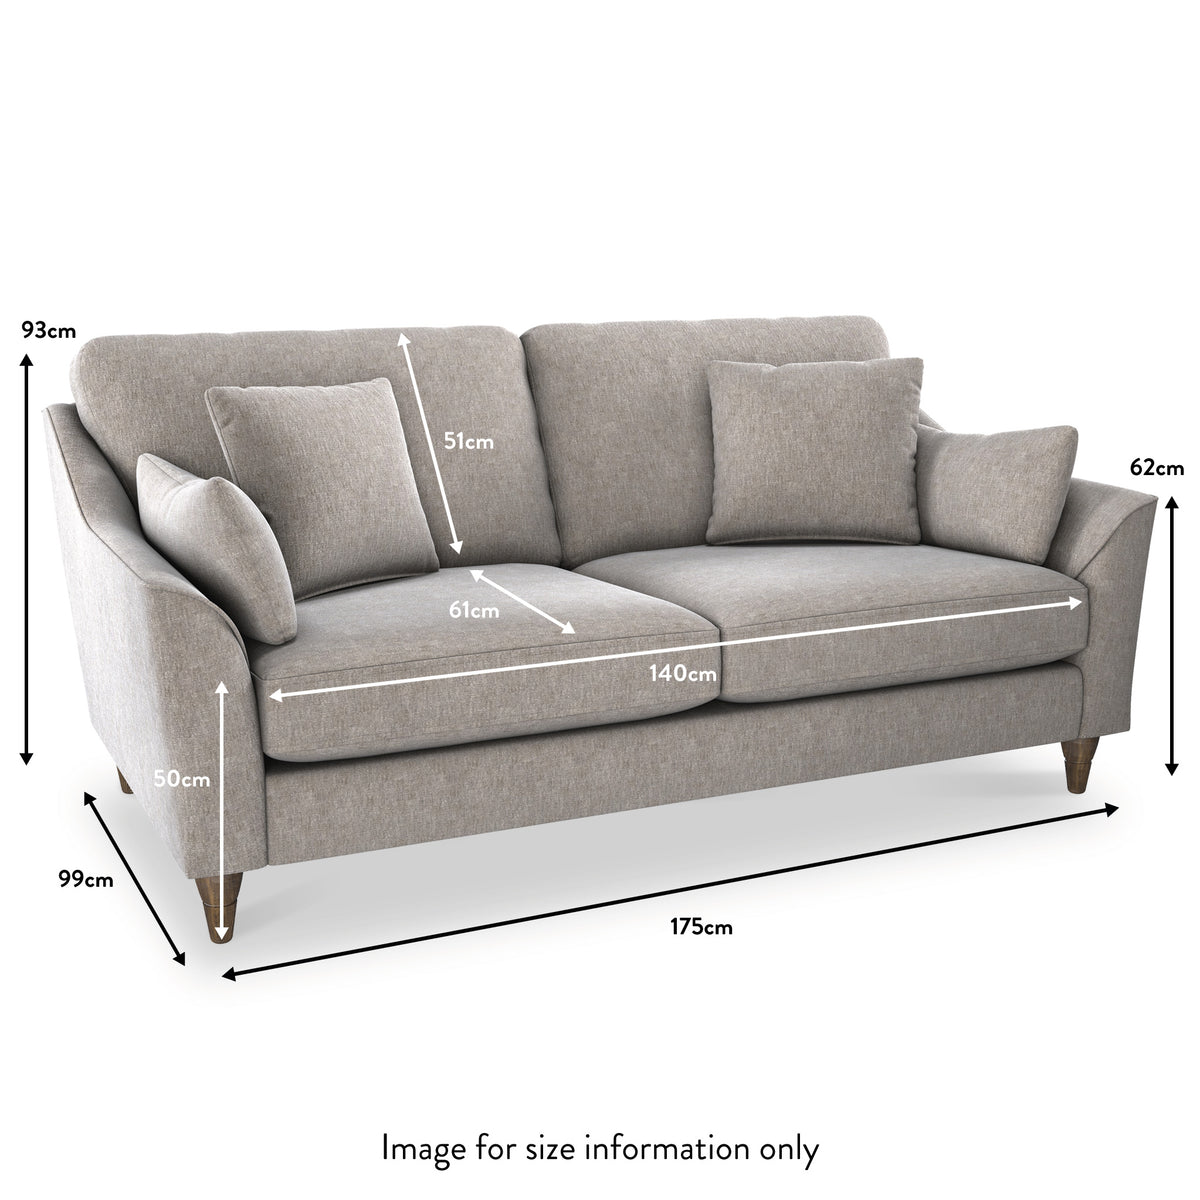 Charice Fog Grey 2 Seater Sofa dimensions